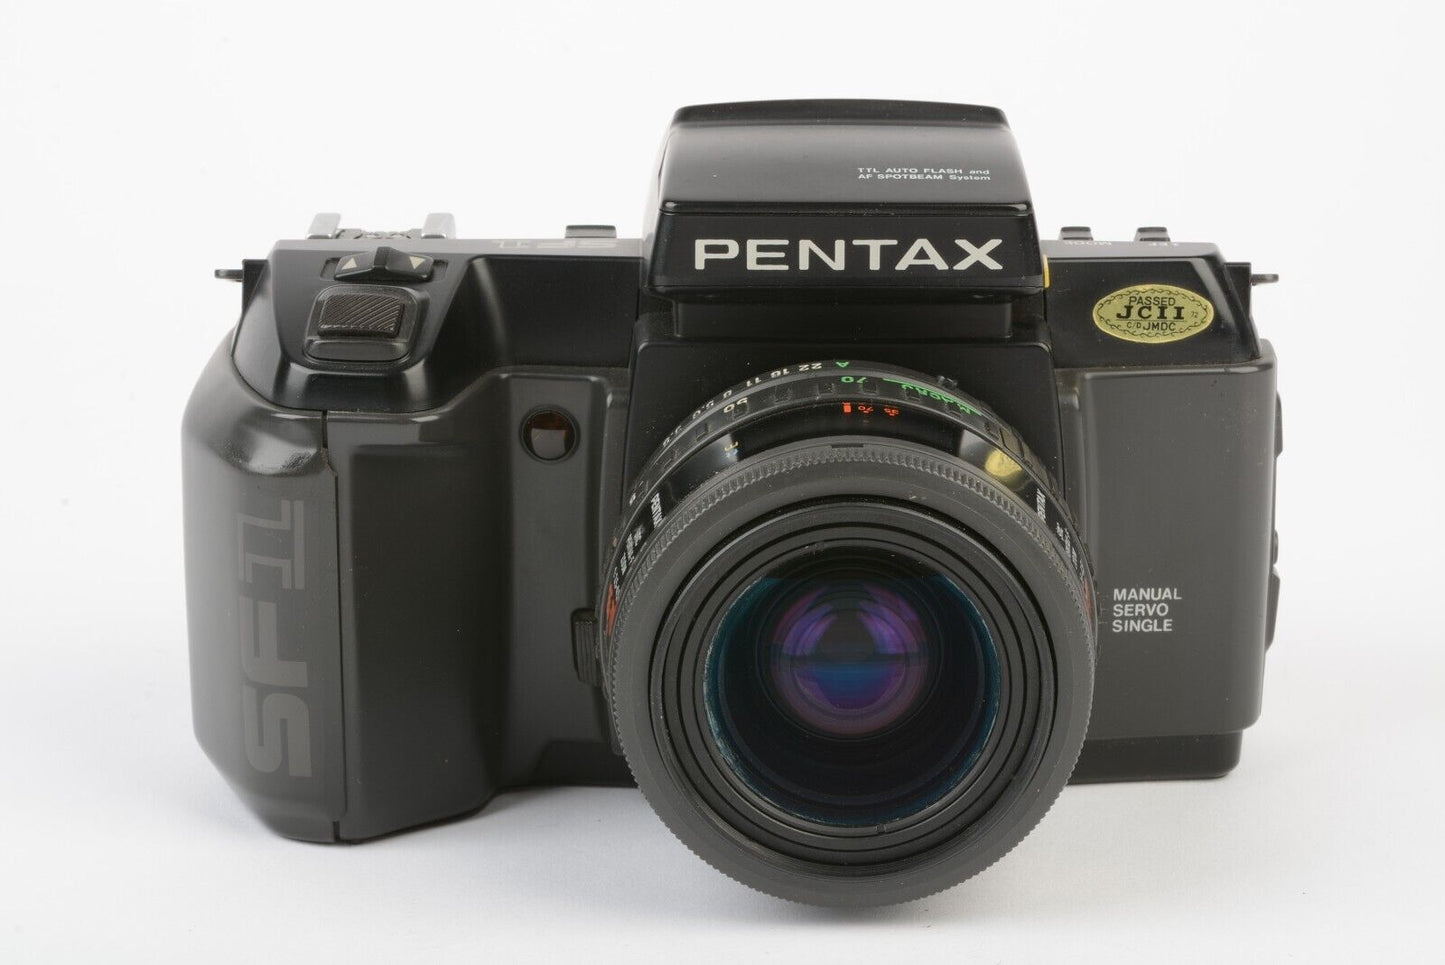 EXC++ PENTAX SF-1 35mm CAMERA w/AF 35-70mm F3.5-4.5 ZOOM, CASE, CAP, SKY, MANUAL